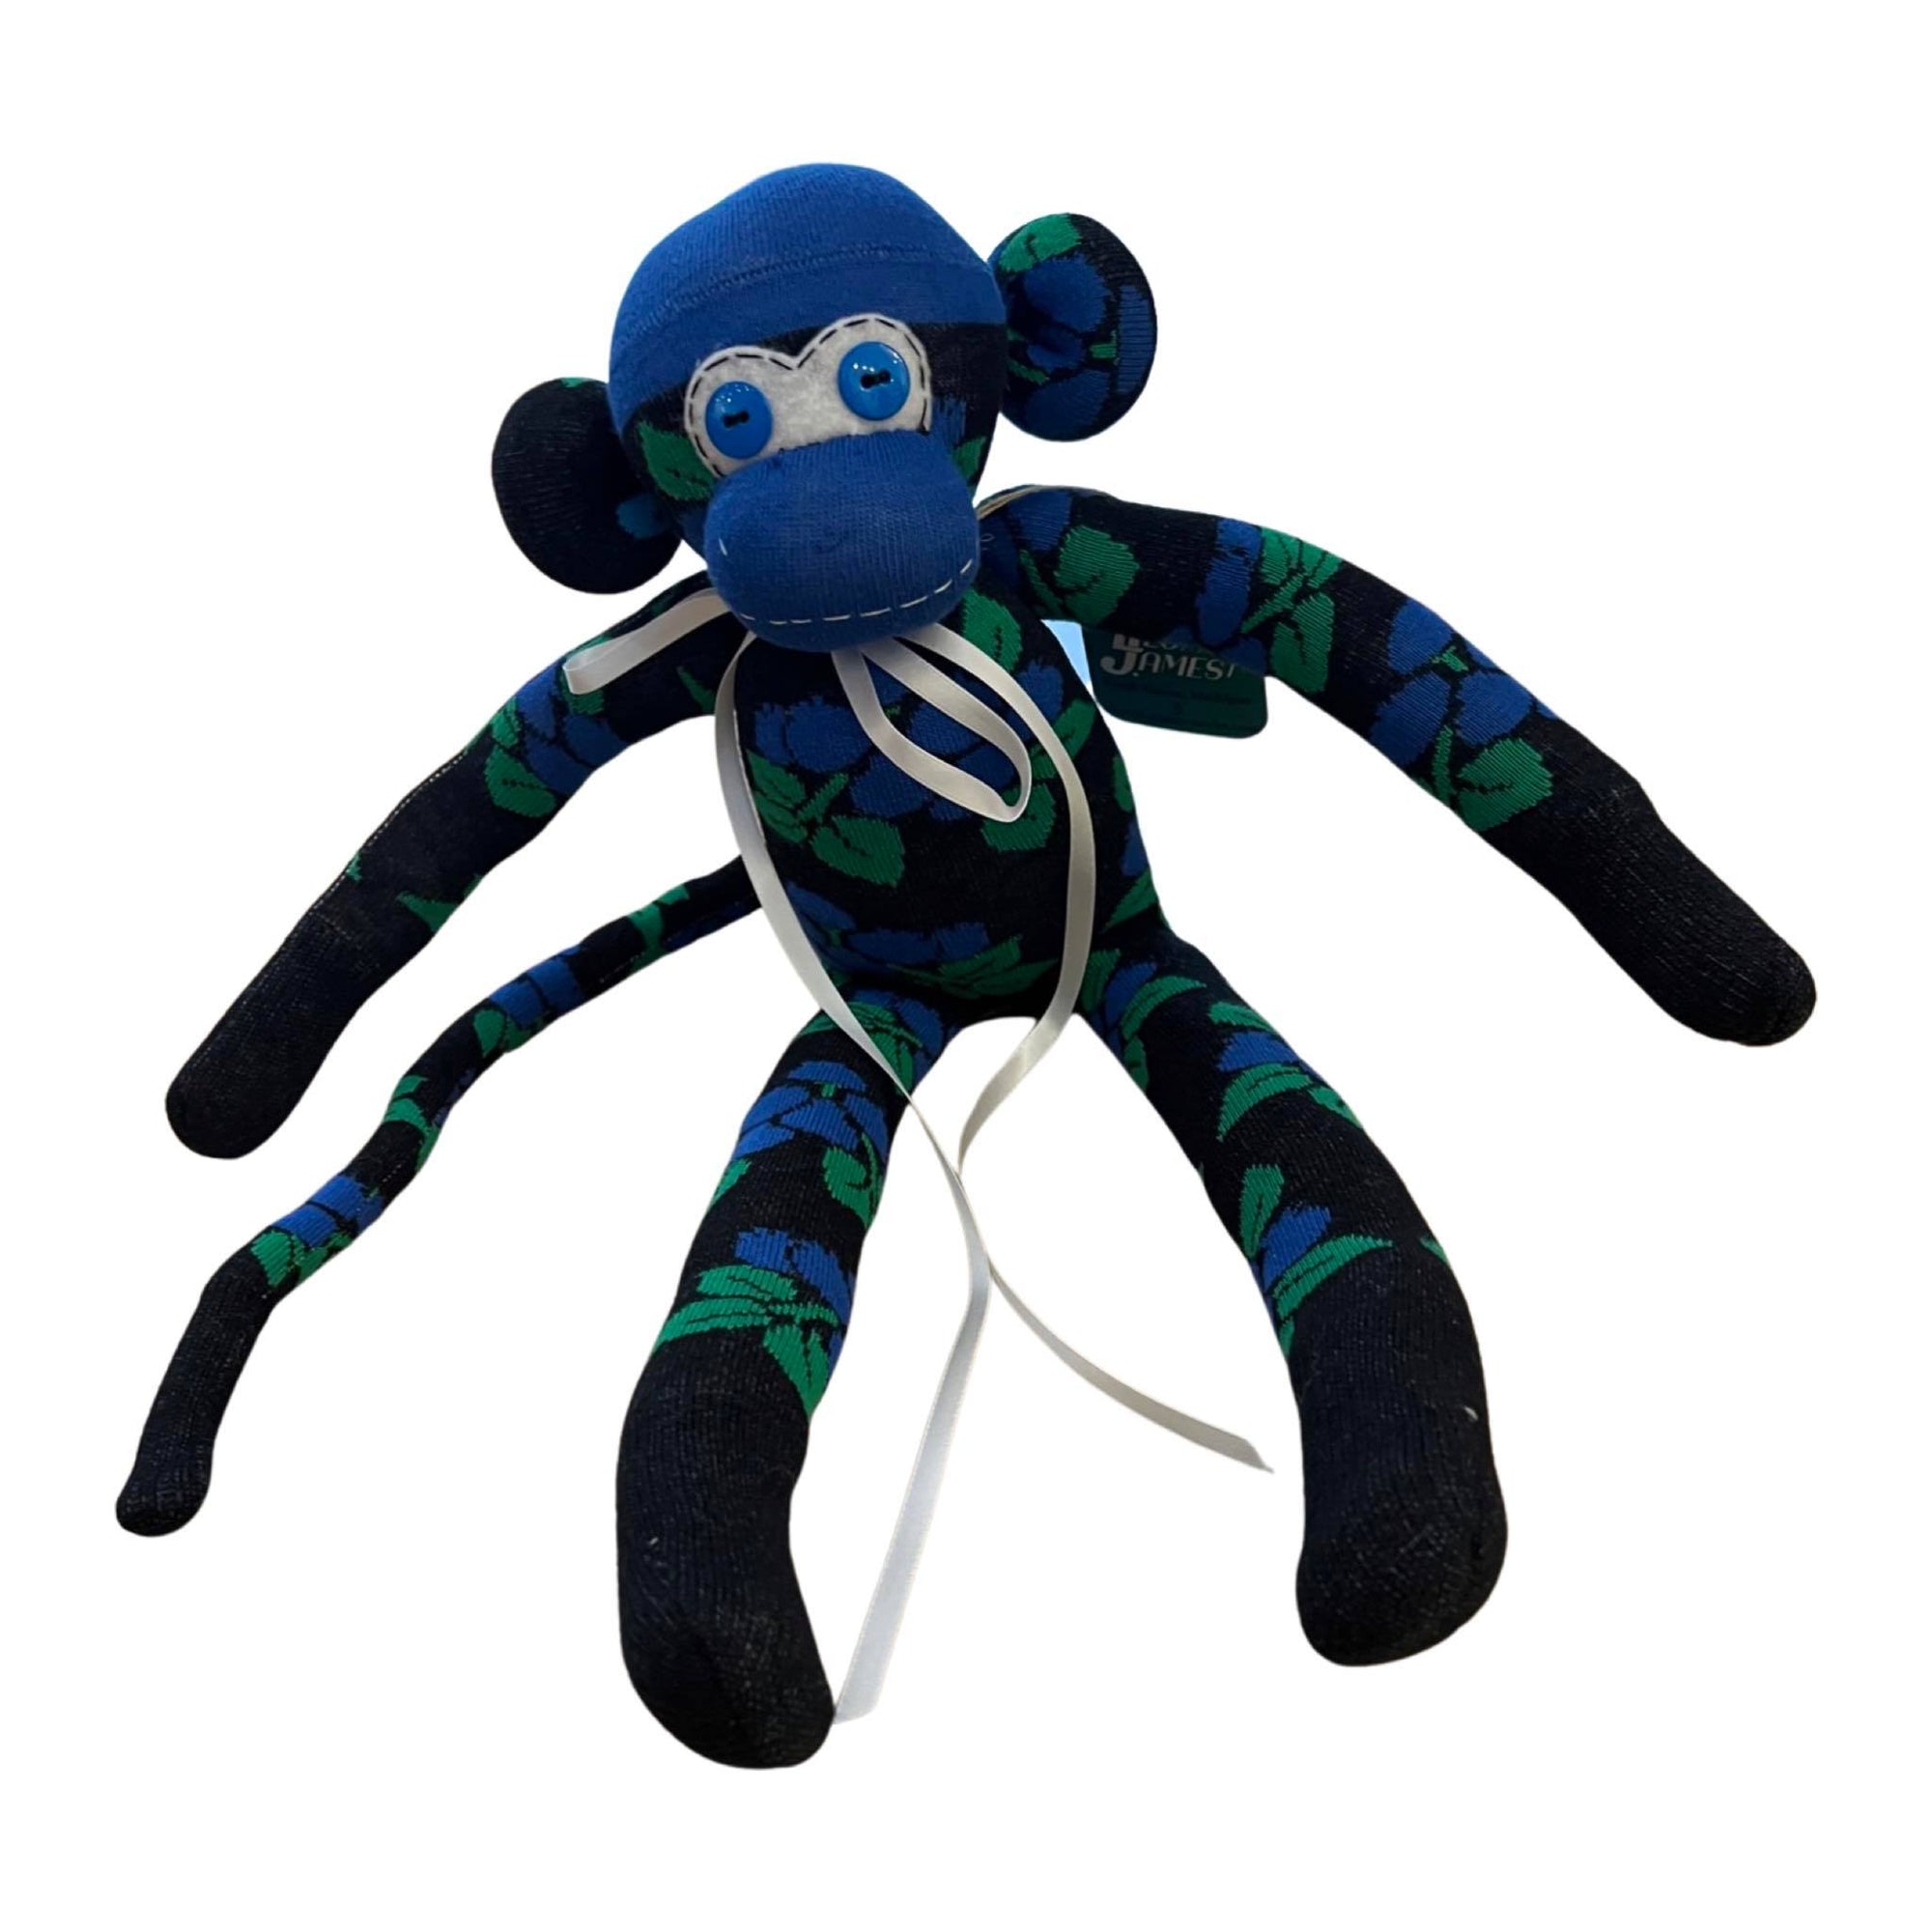 "LEO" Sock Monkey - Blueberry Monkey